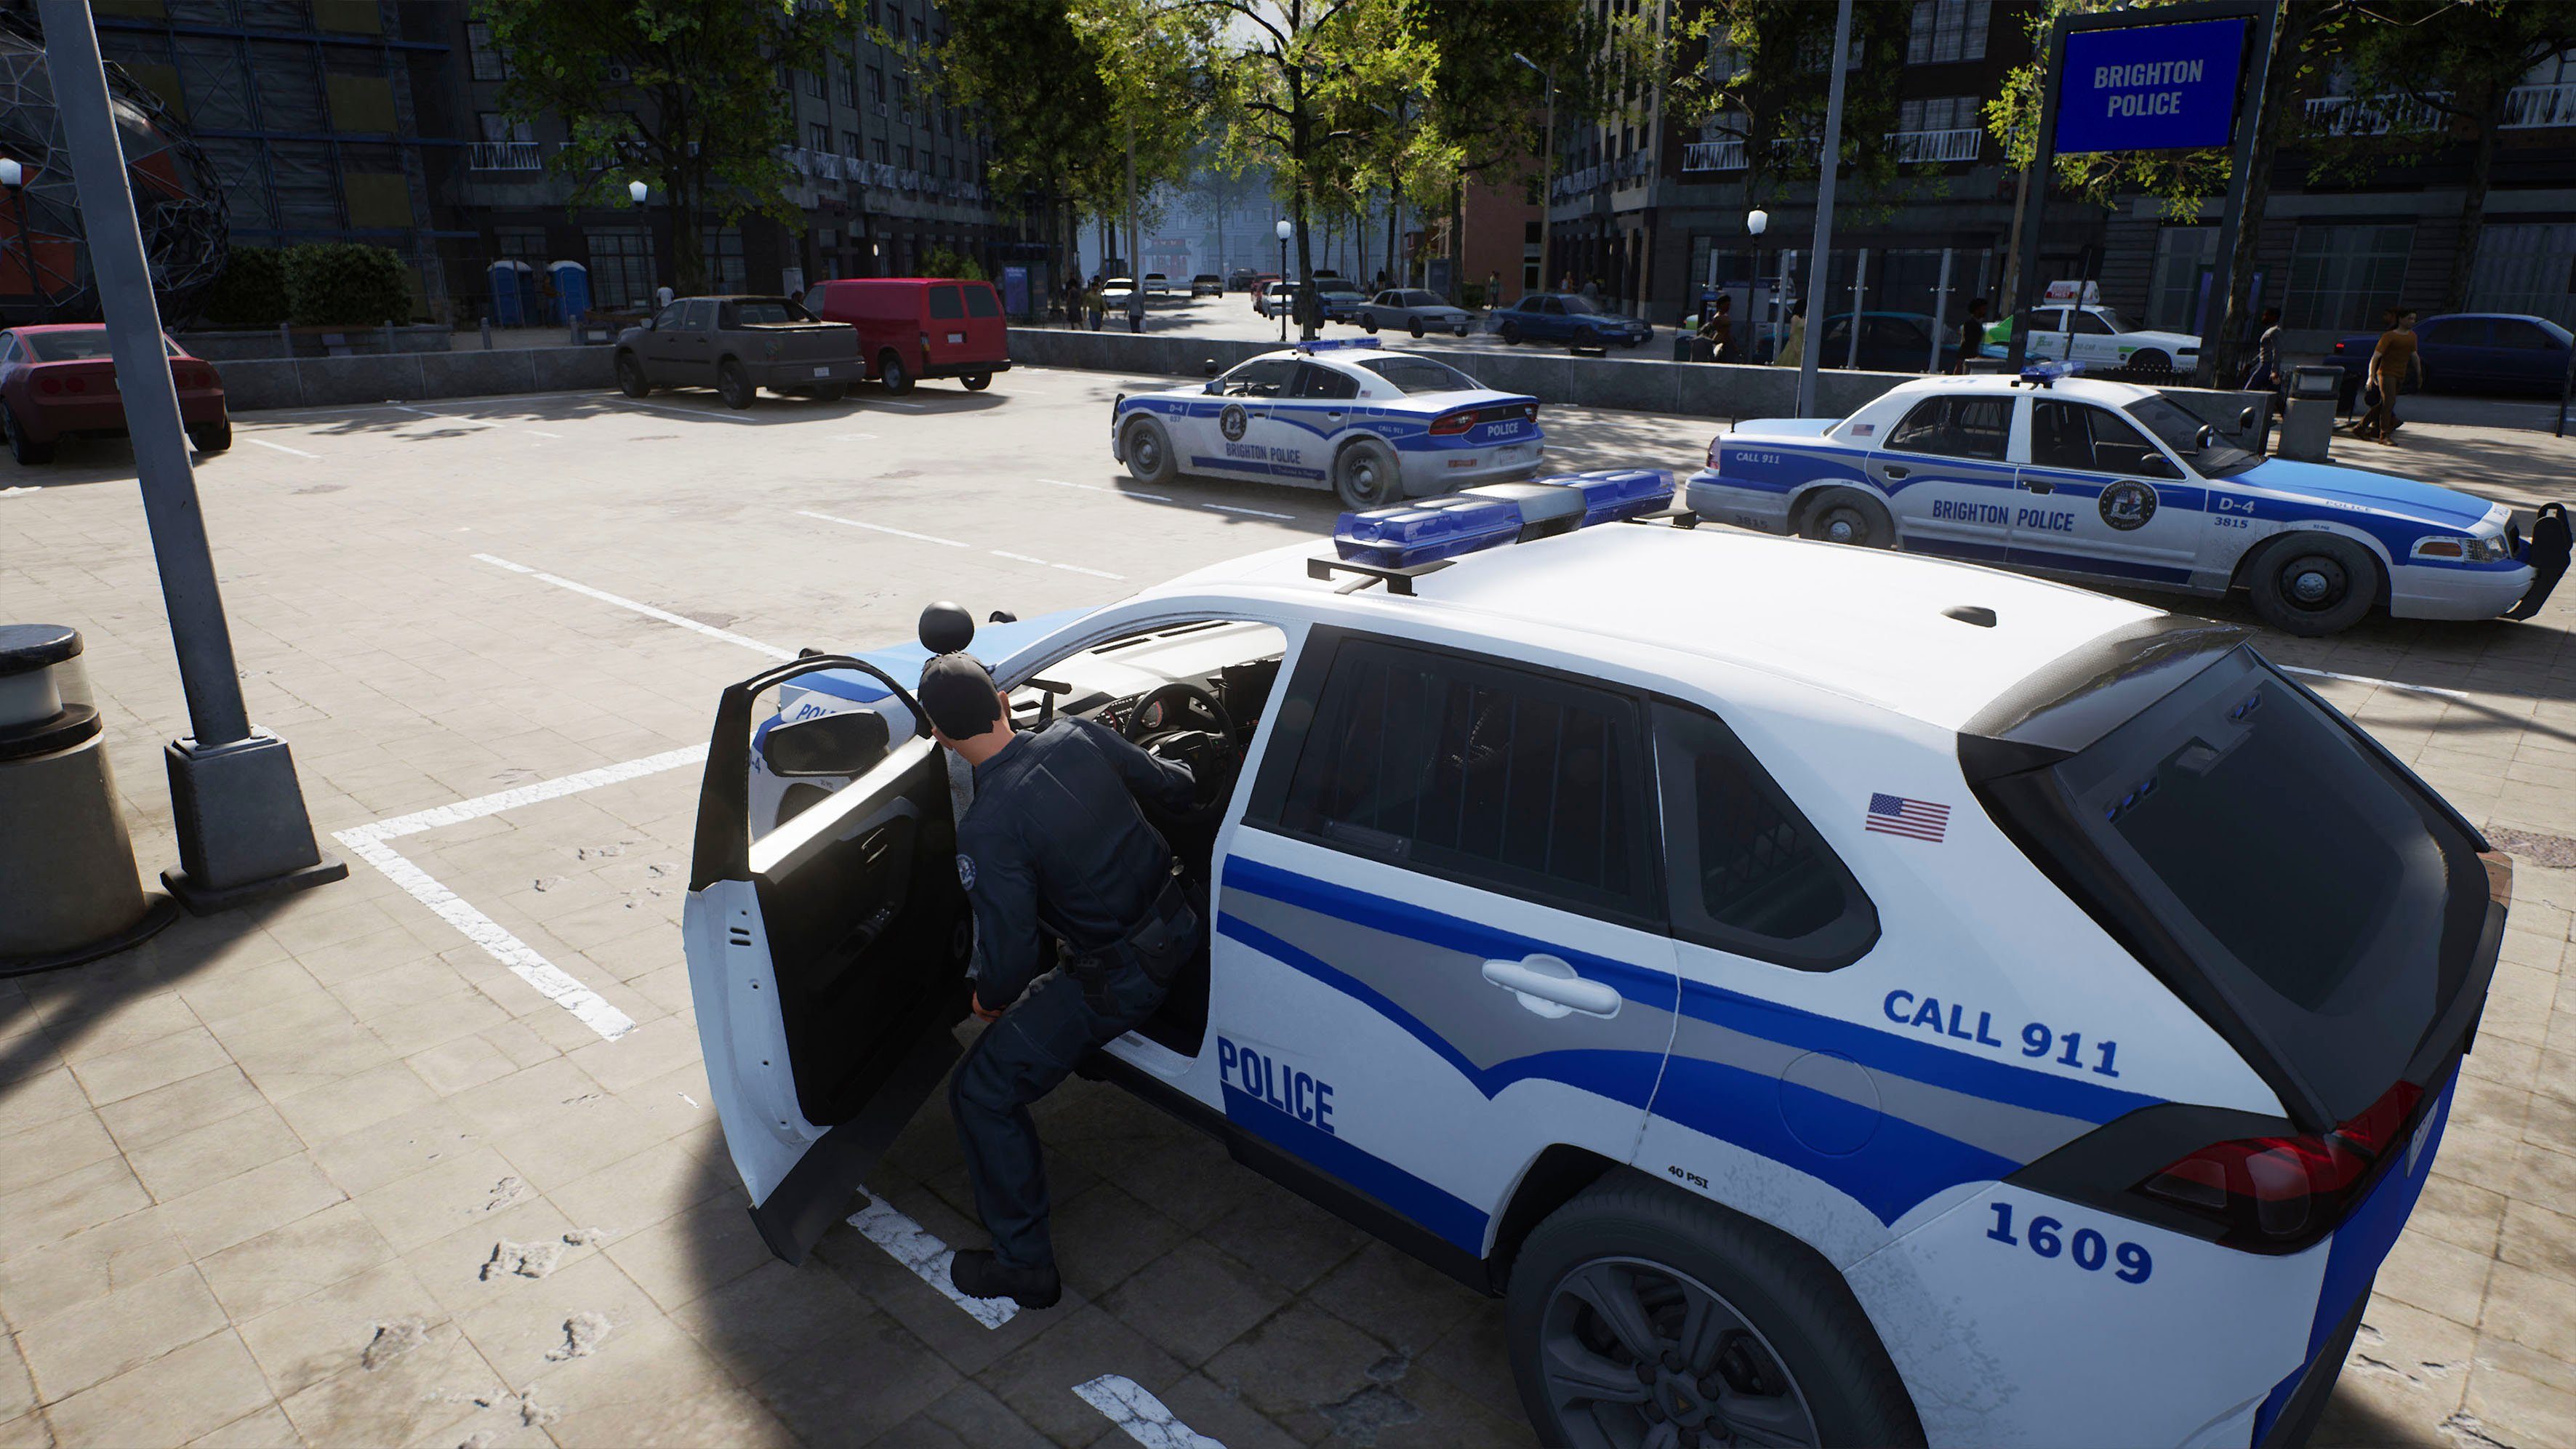 PlayStation Patrol 5 Simulator: Police Astragon Officers